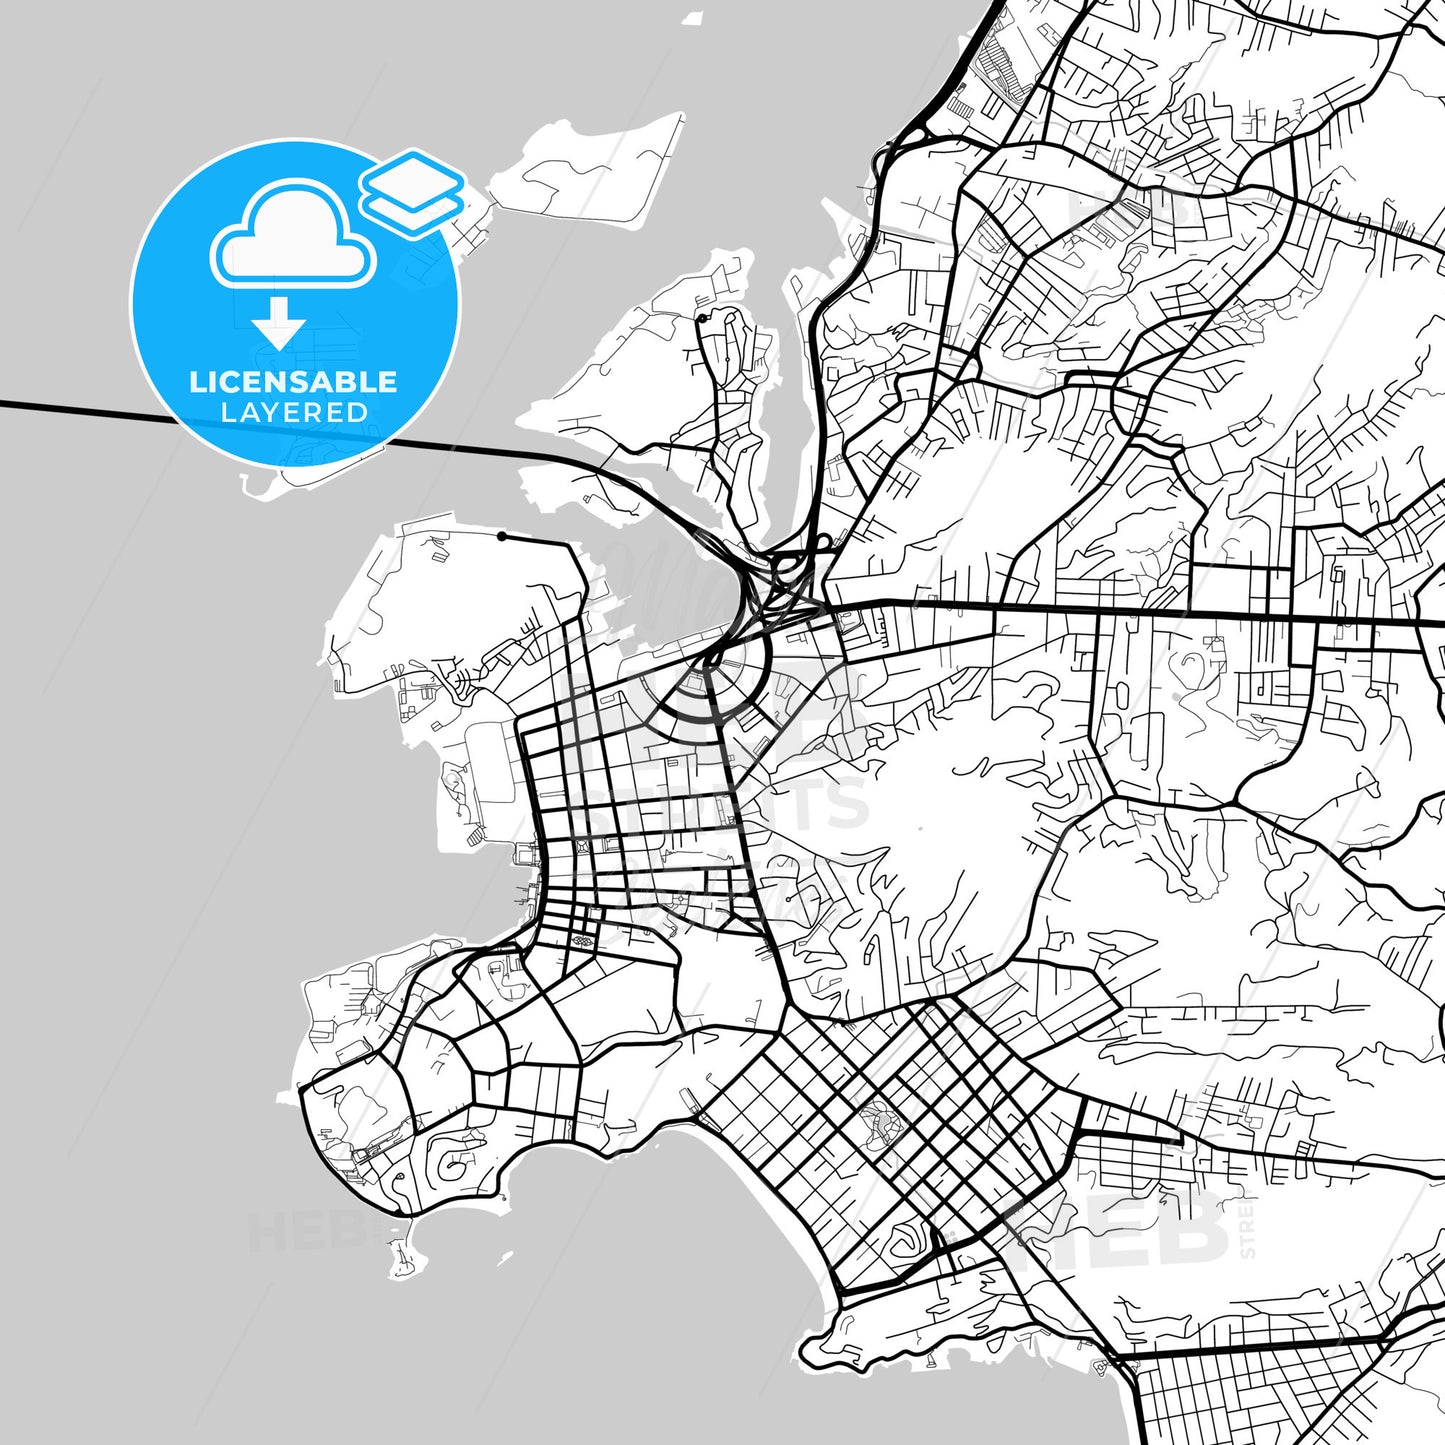 Layered PDF map of Niteroi, Brazil